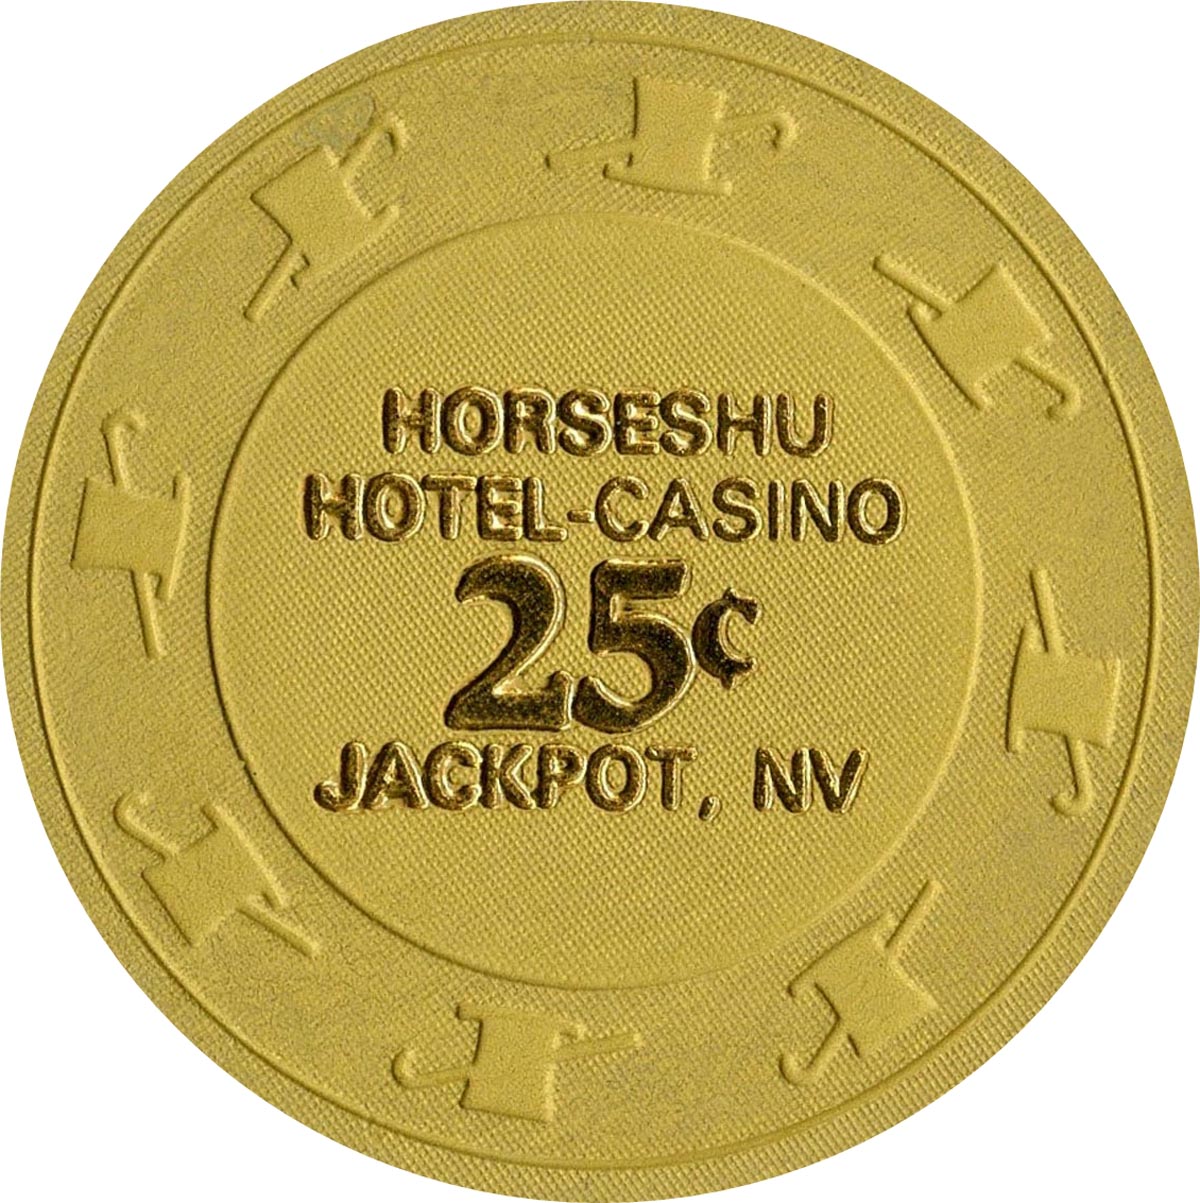 horseshoe hotel and casino jackpot nevada